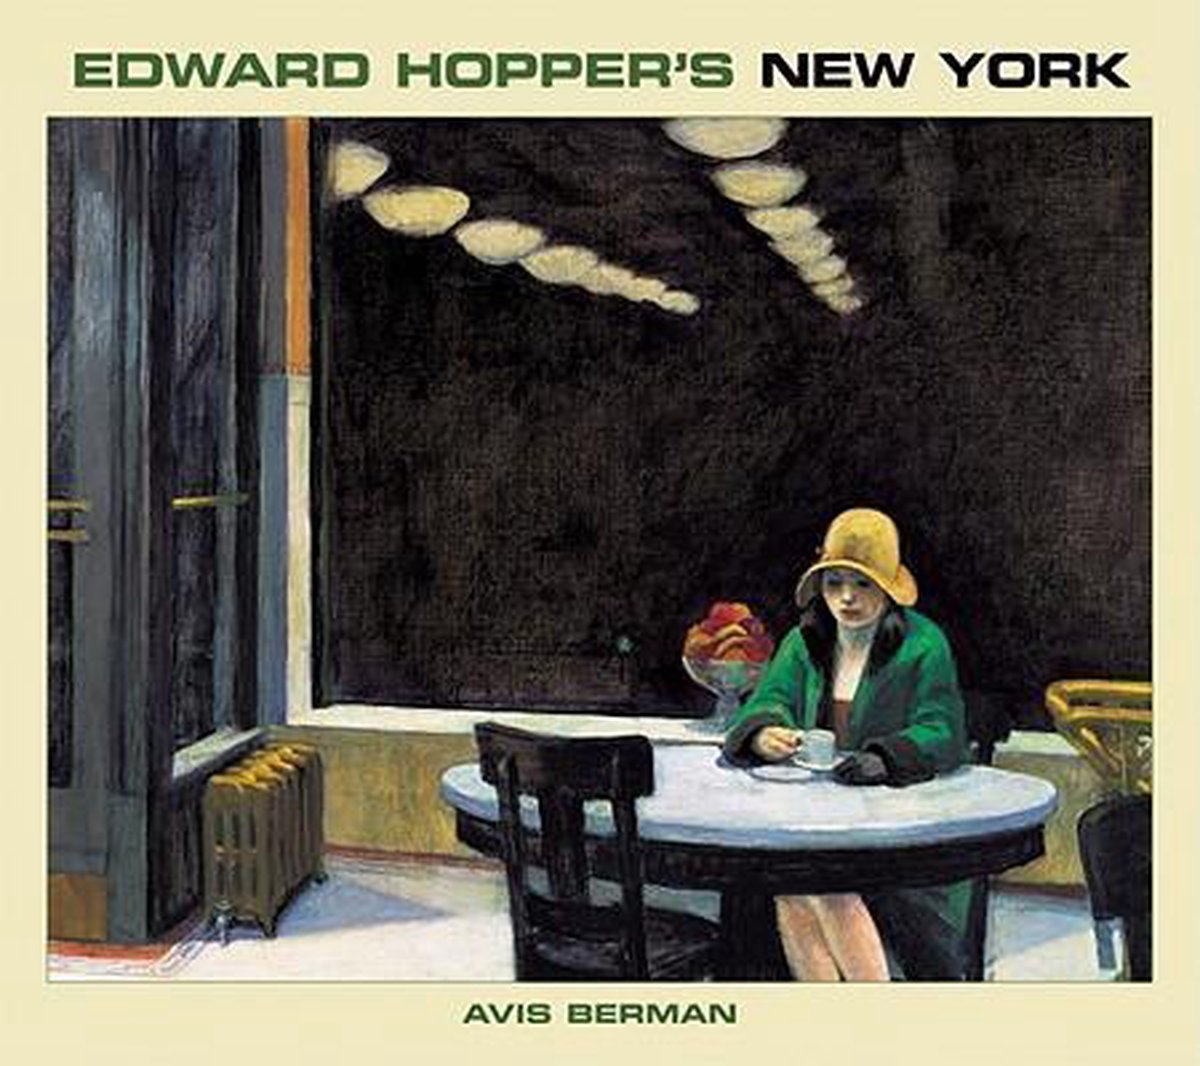 edward hopper's new york book review